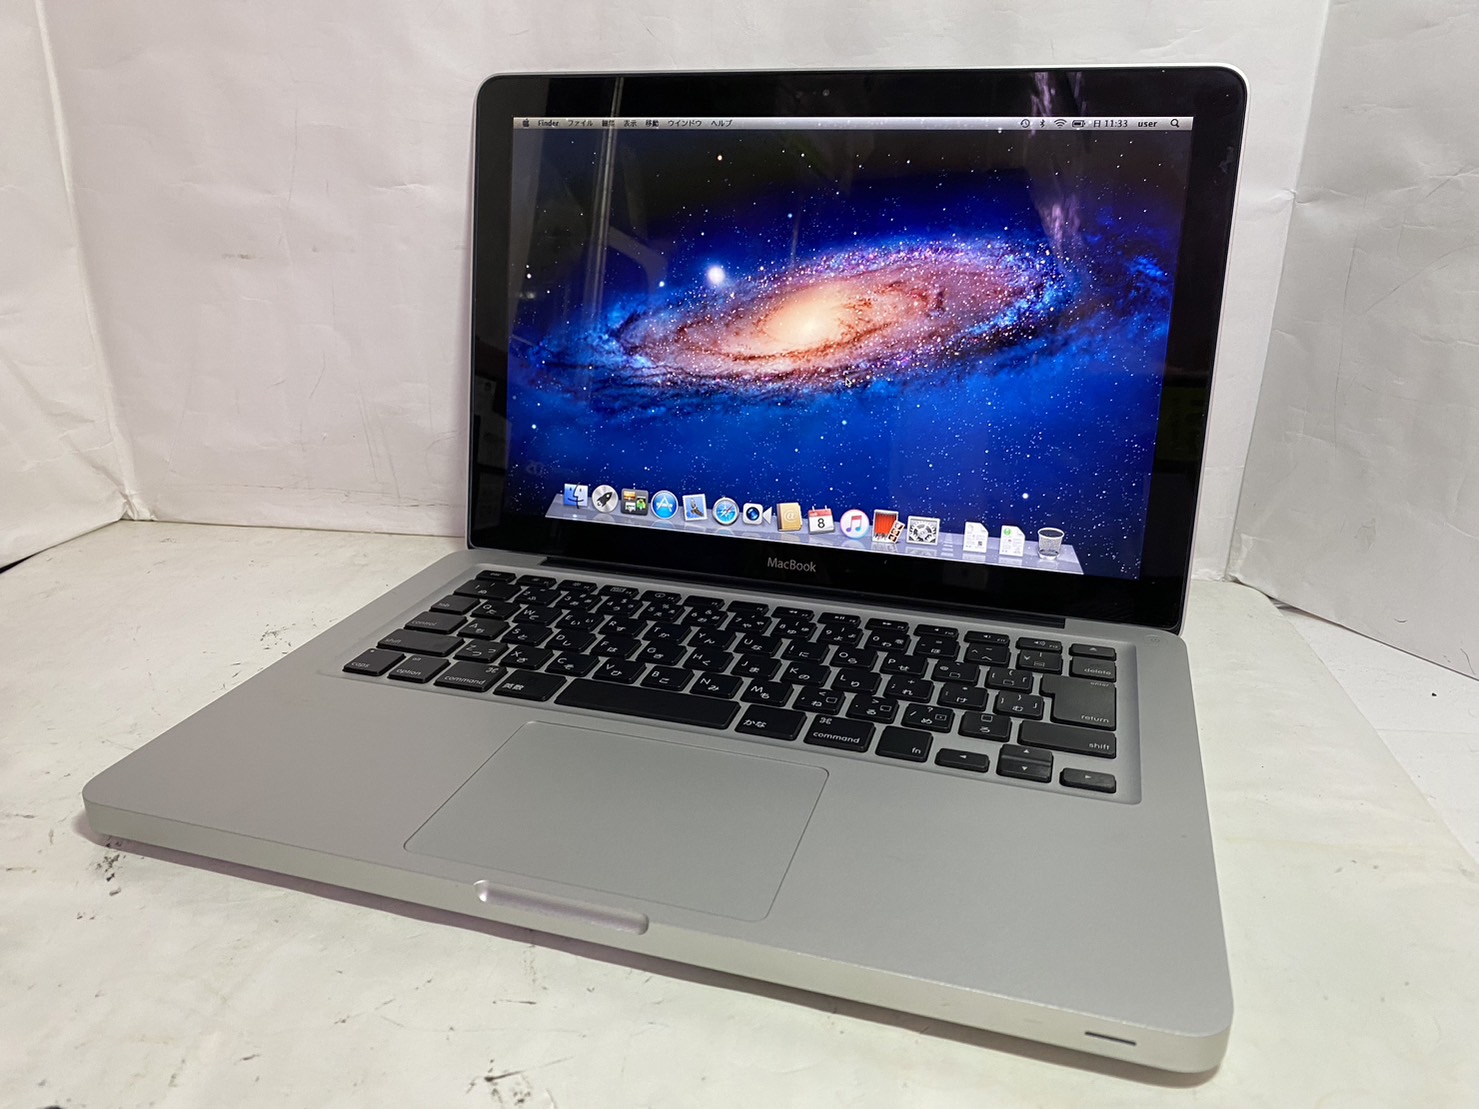 APPLE(アップル) MacBook Pro (13-inch, Mid 2008) A1278